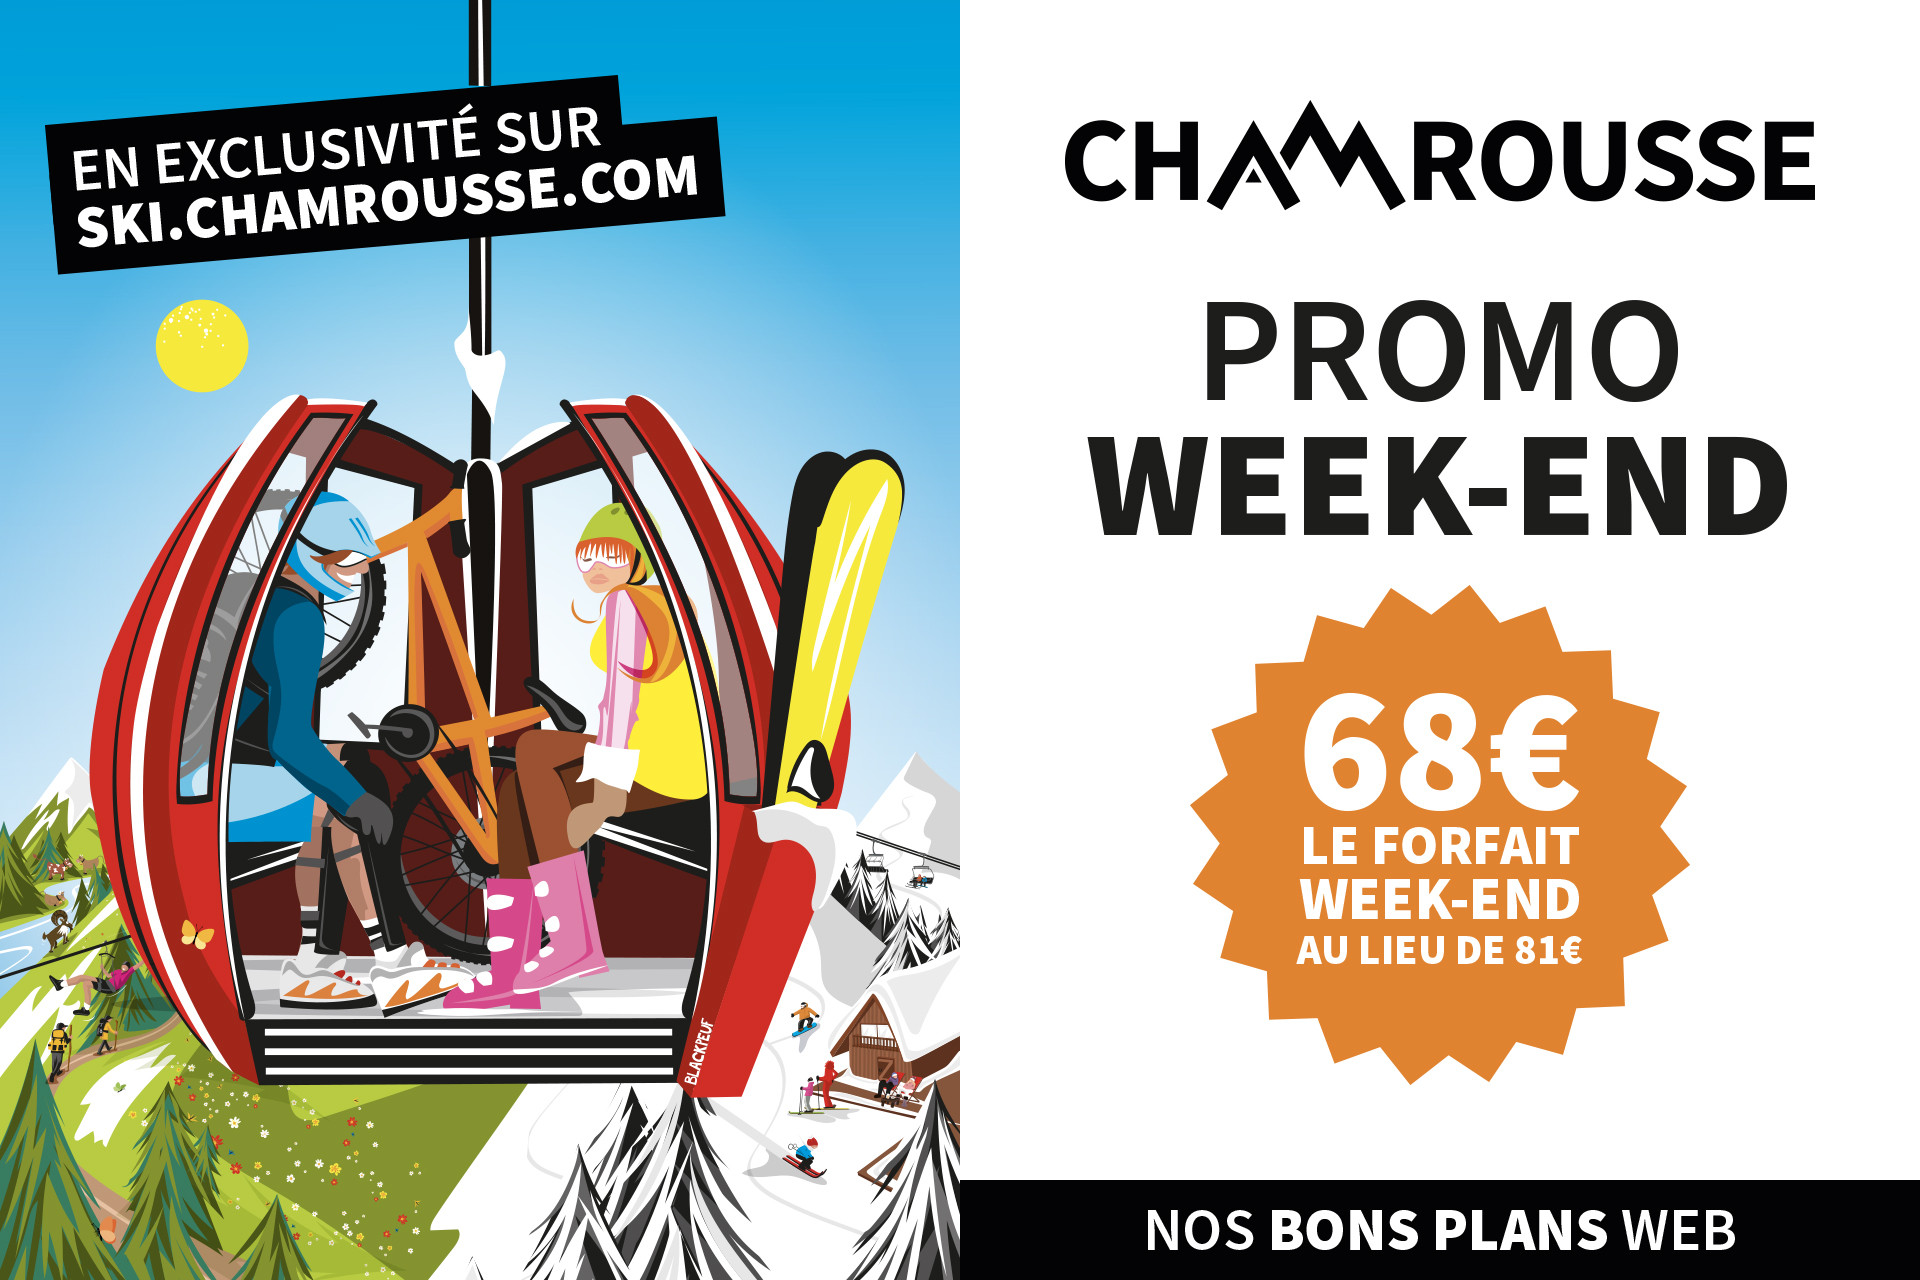 Chamrousse promotion week-end forfait ski station montagne grenoble isère lyon rhône alpes france